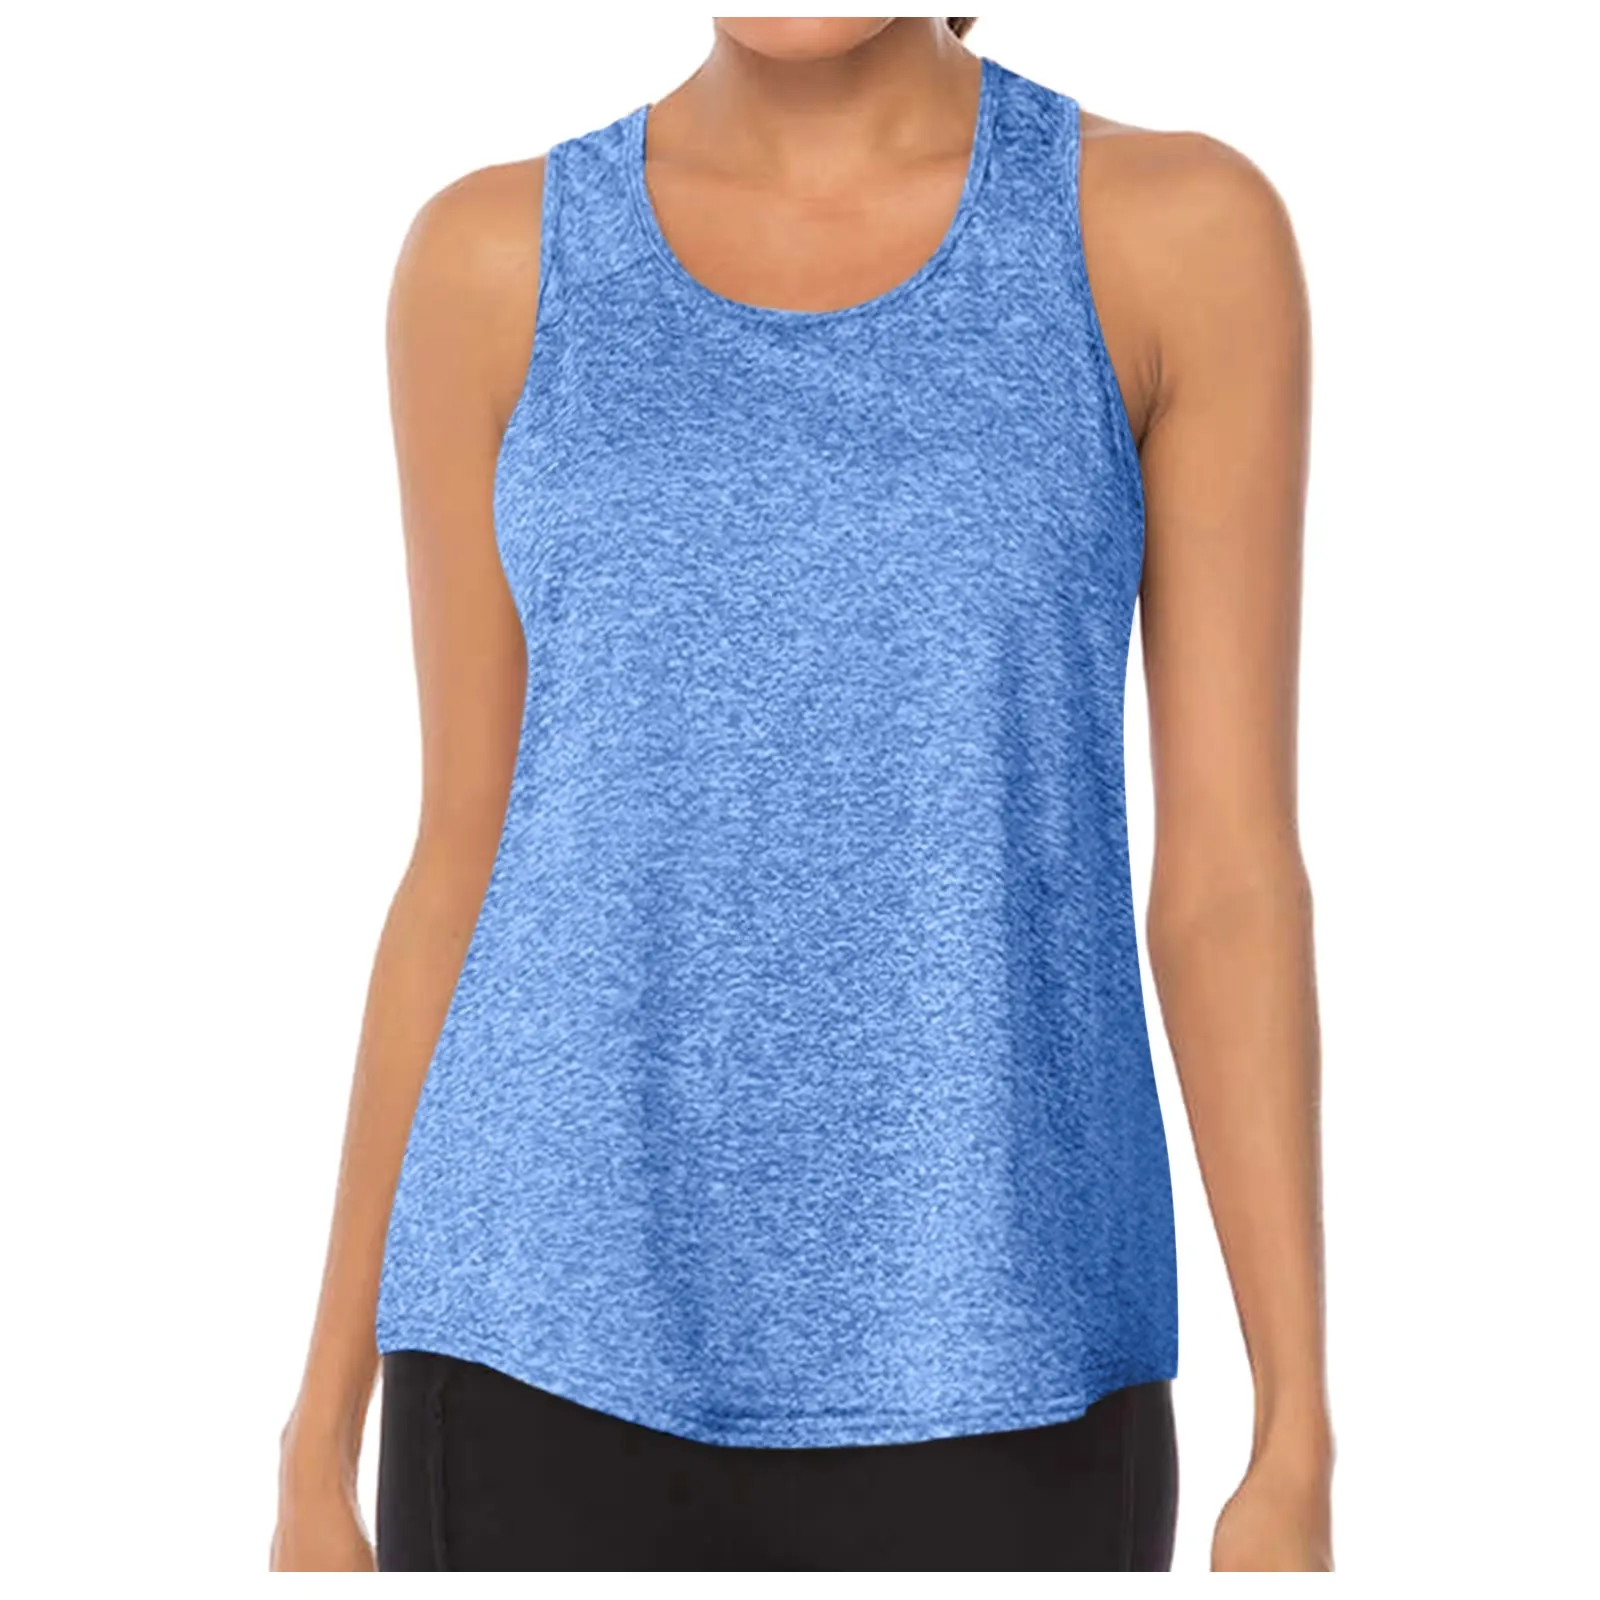 Top Selling Sleeveless Racerback Yoga Vest Sport Singlet Women Athletic Fitness Sport Tank Tops Gym Running Training Yoga Shirts